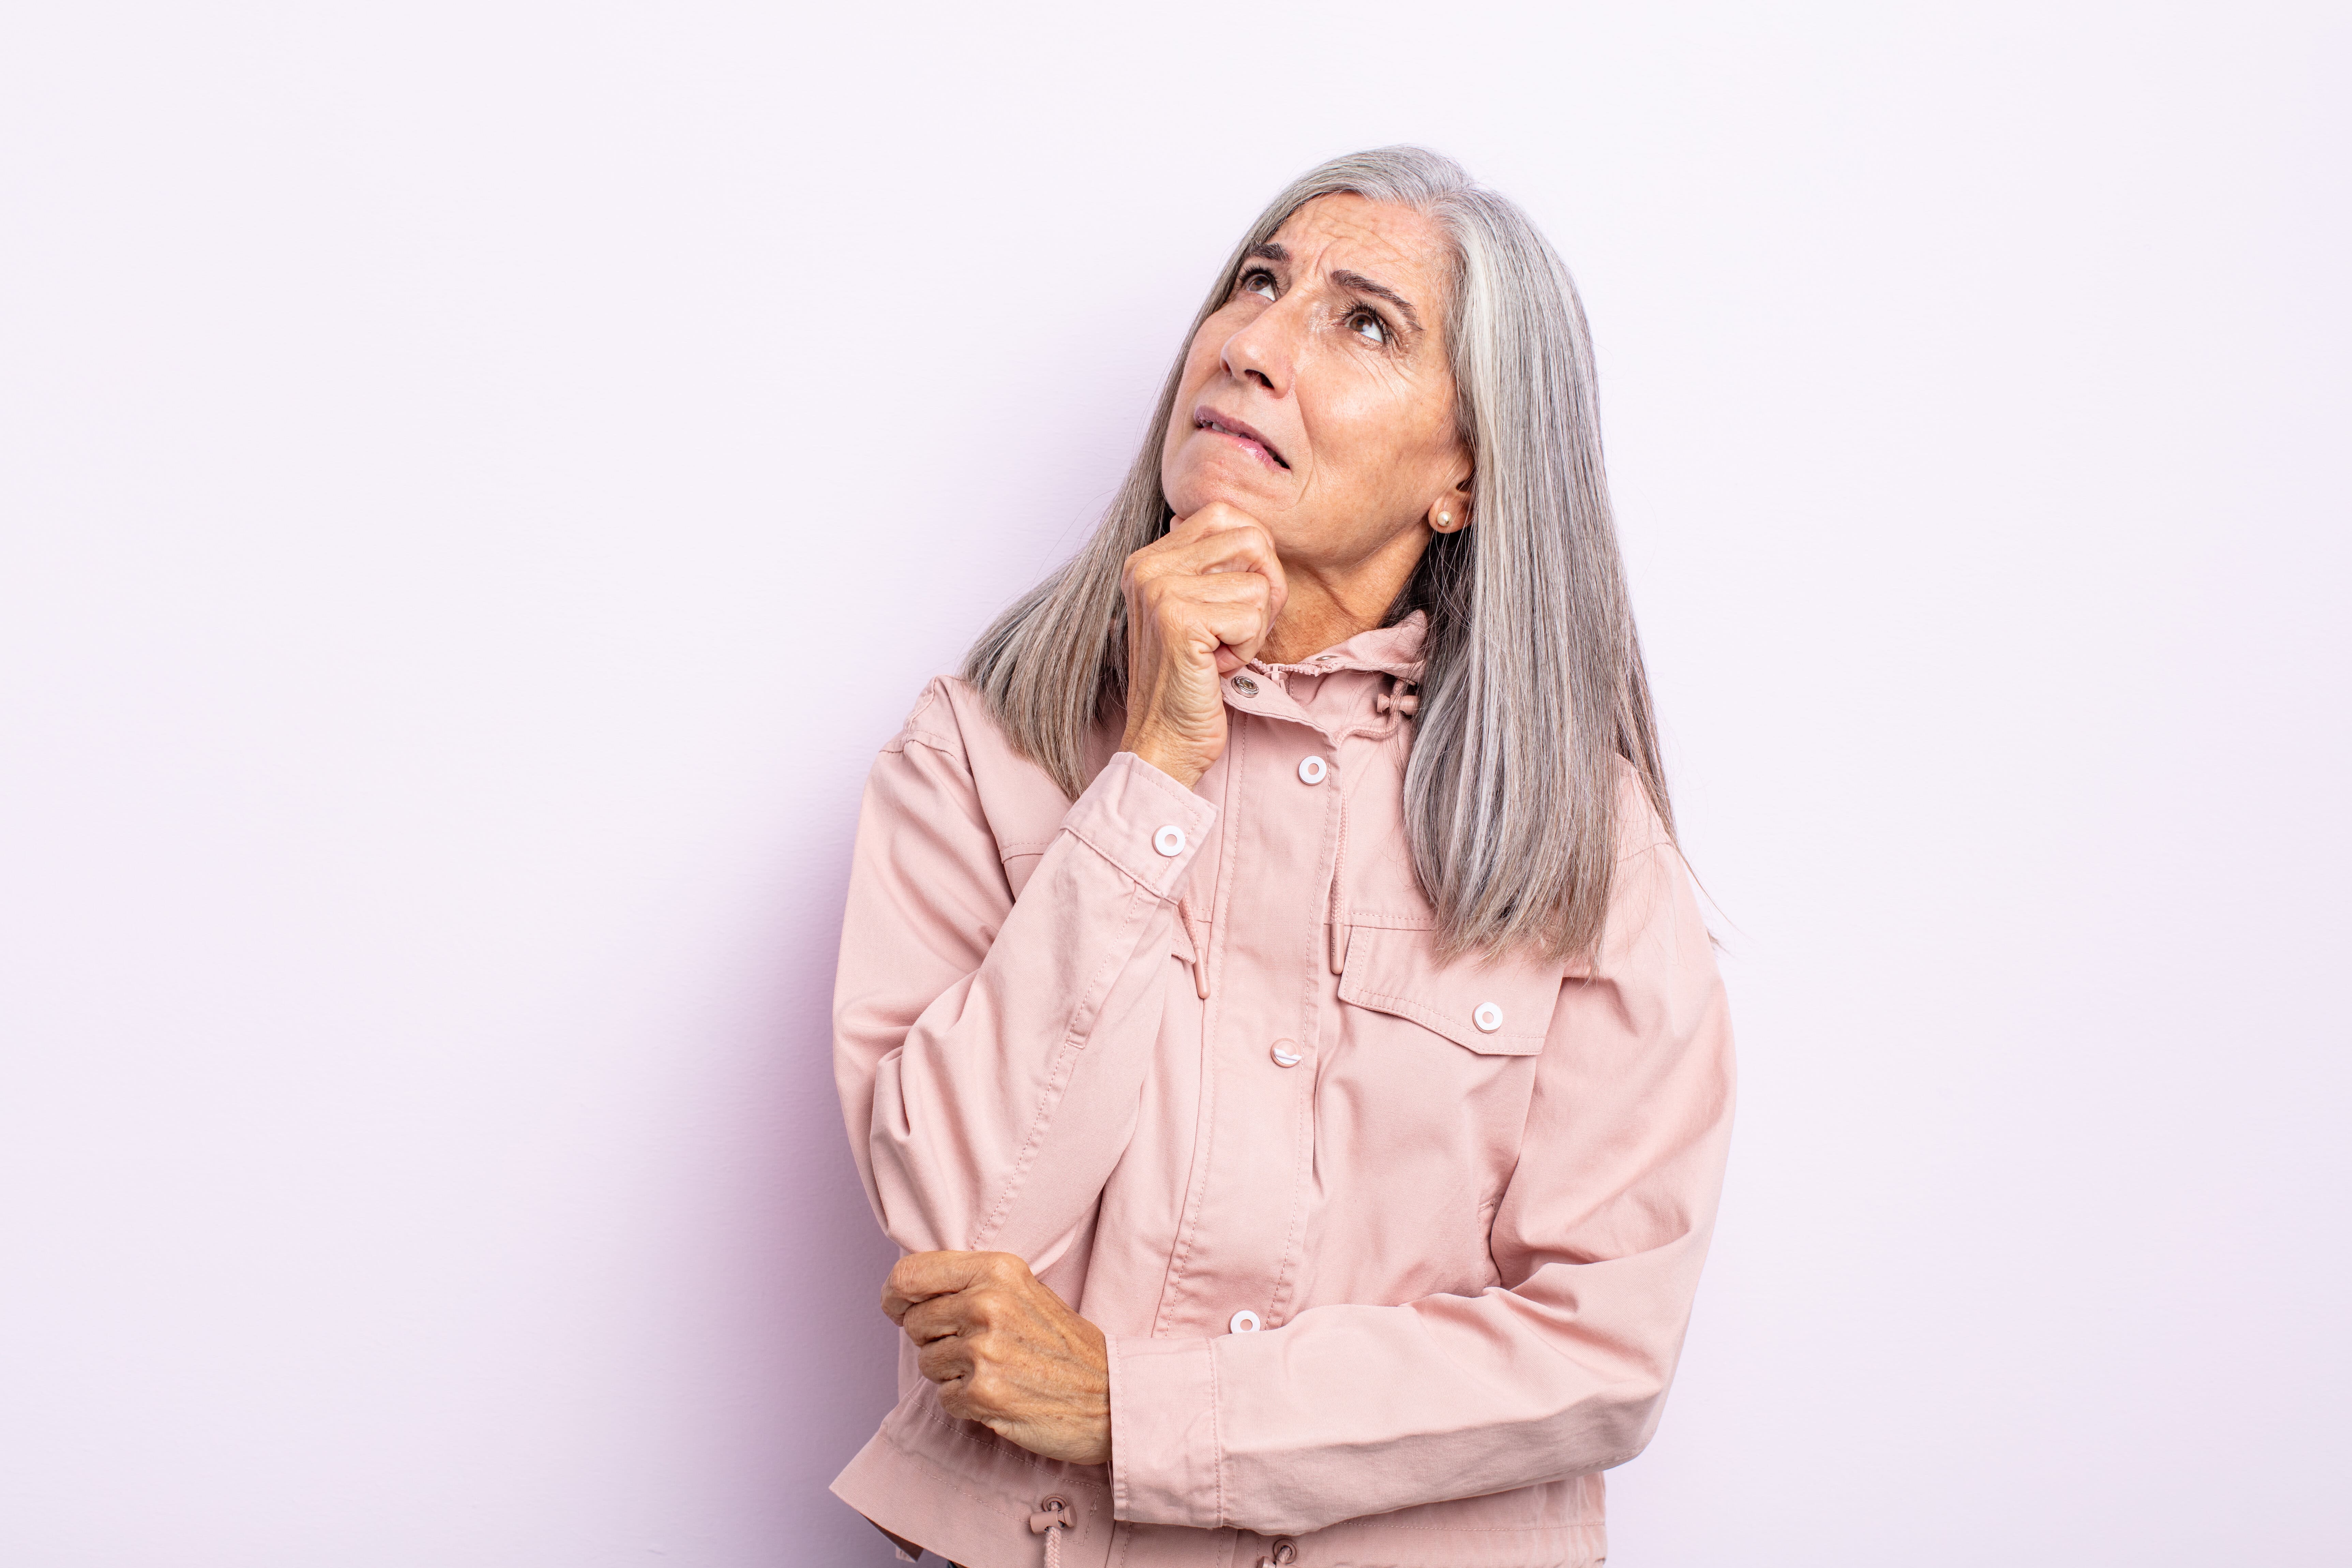 Ressecamento vaginal na menopausa: como lidar?